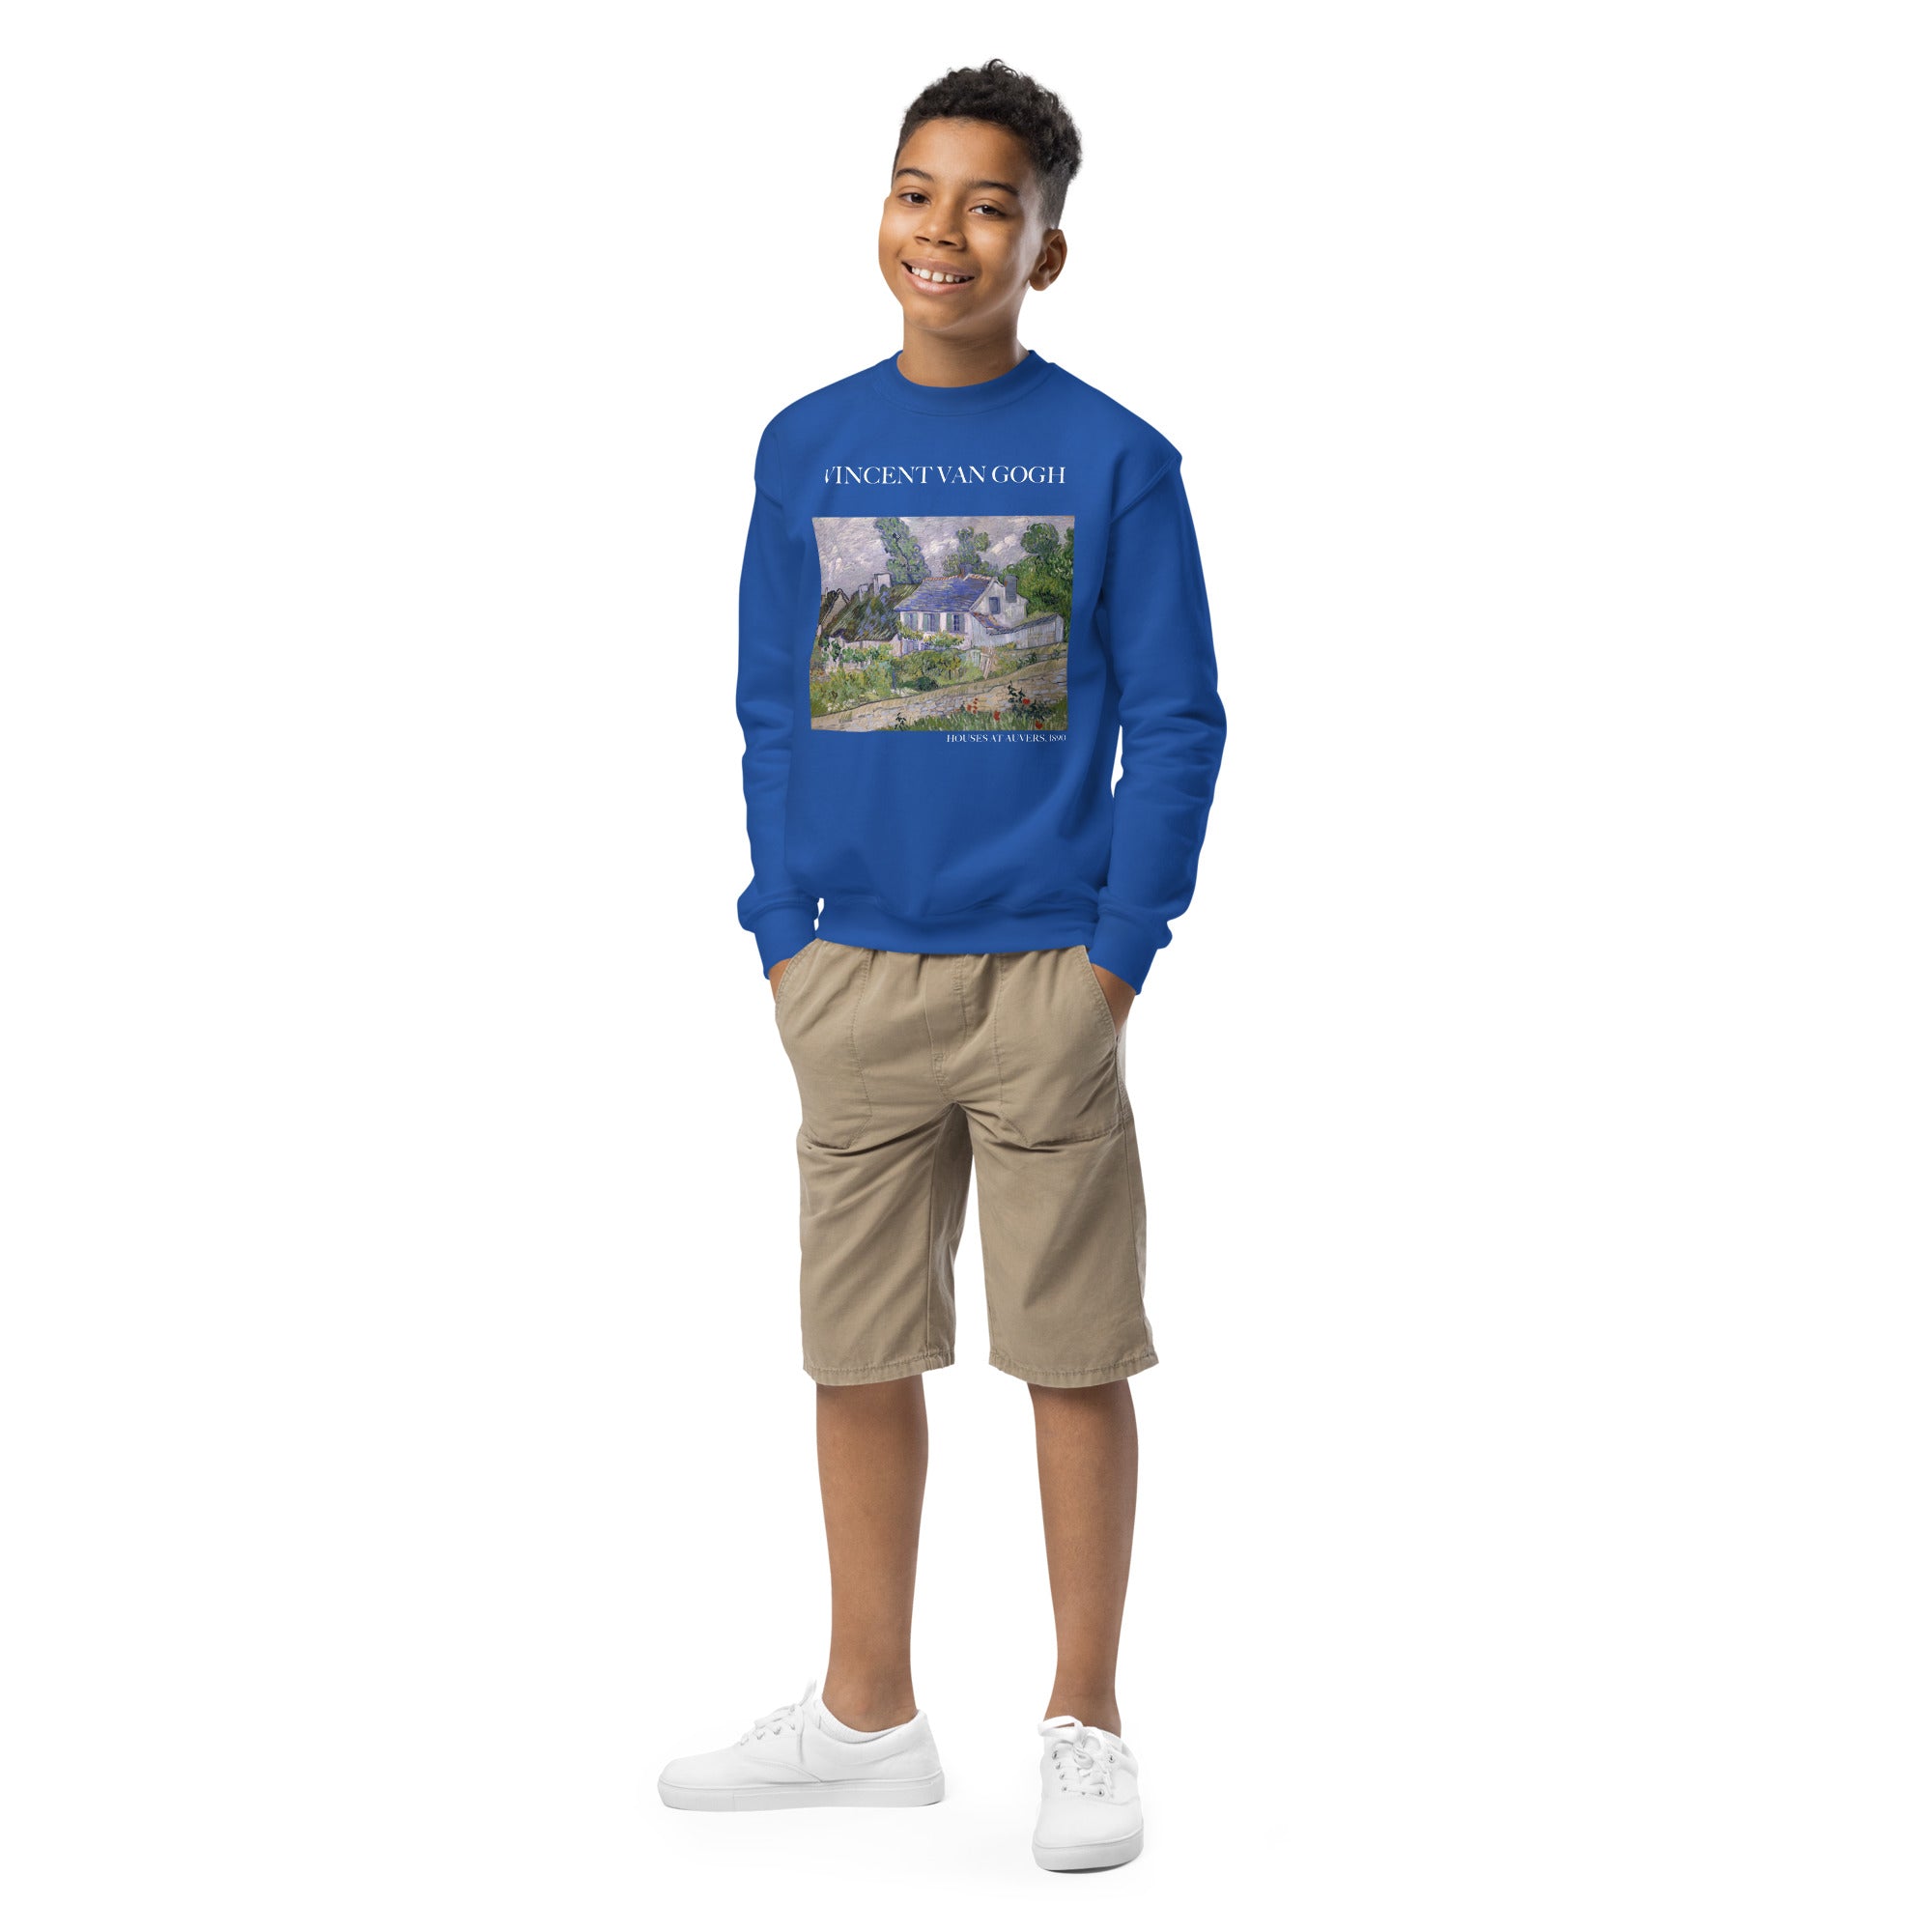 Vincent van Gogh 'Houses at Auvers' Famous Painting Crewneck Sweatshirt | Premium Youth Art Sweatshirt